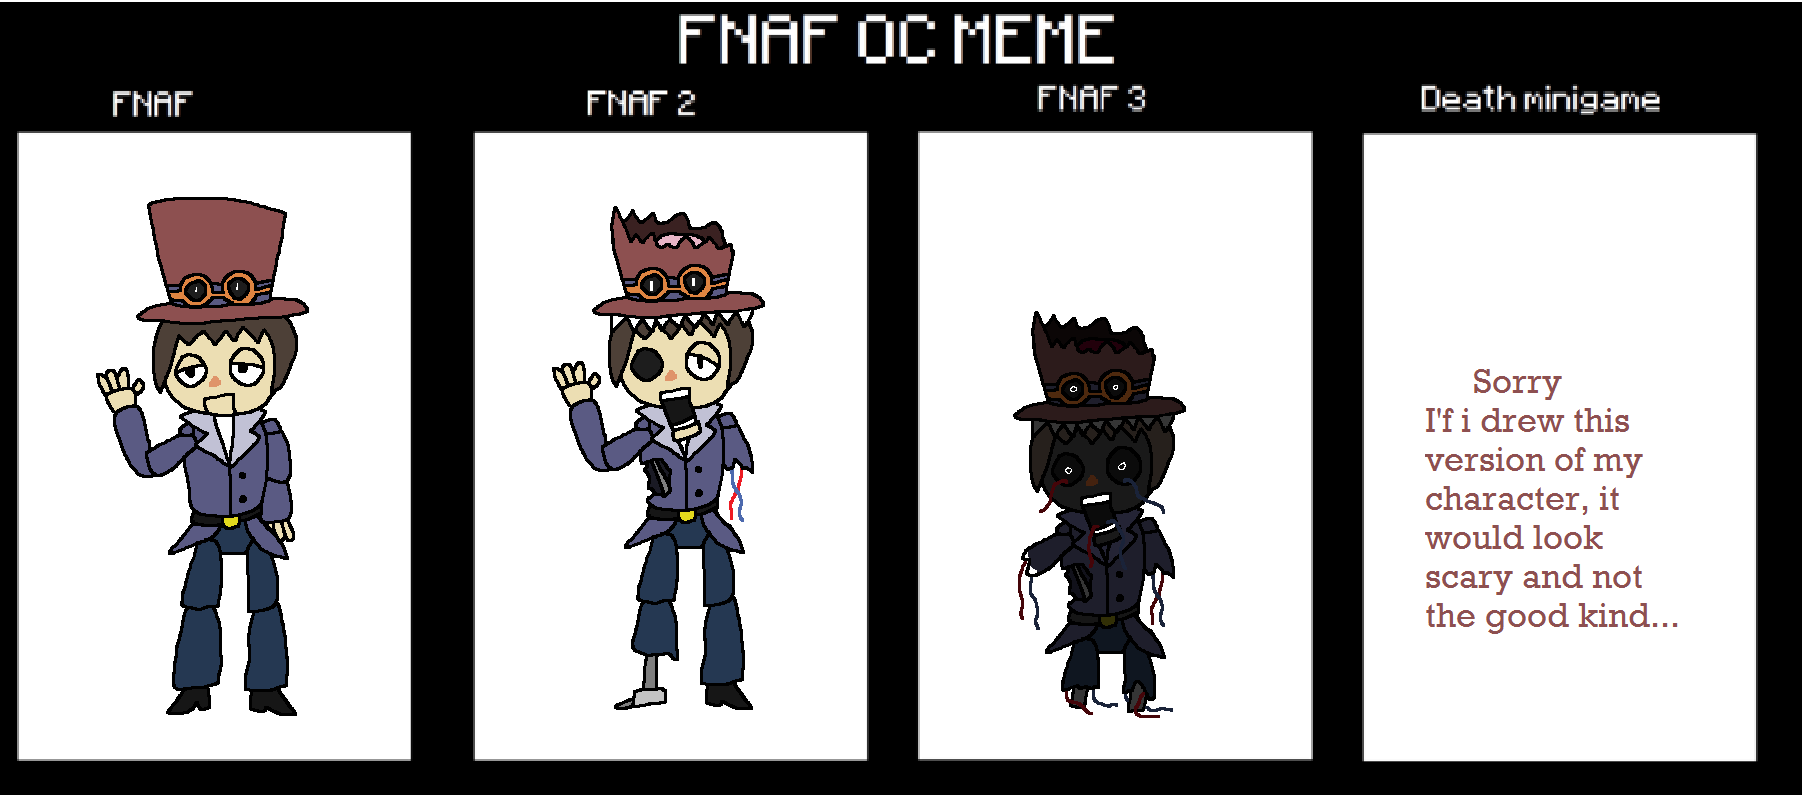 FNAF 3 minigame meme - Imgflip